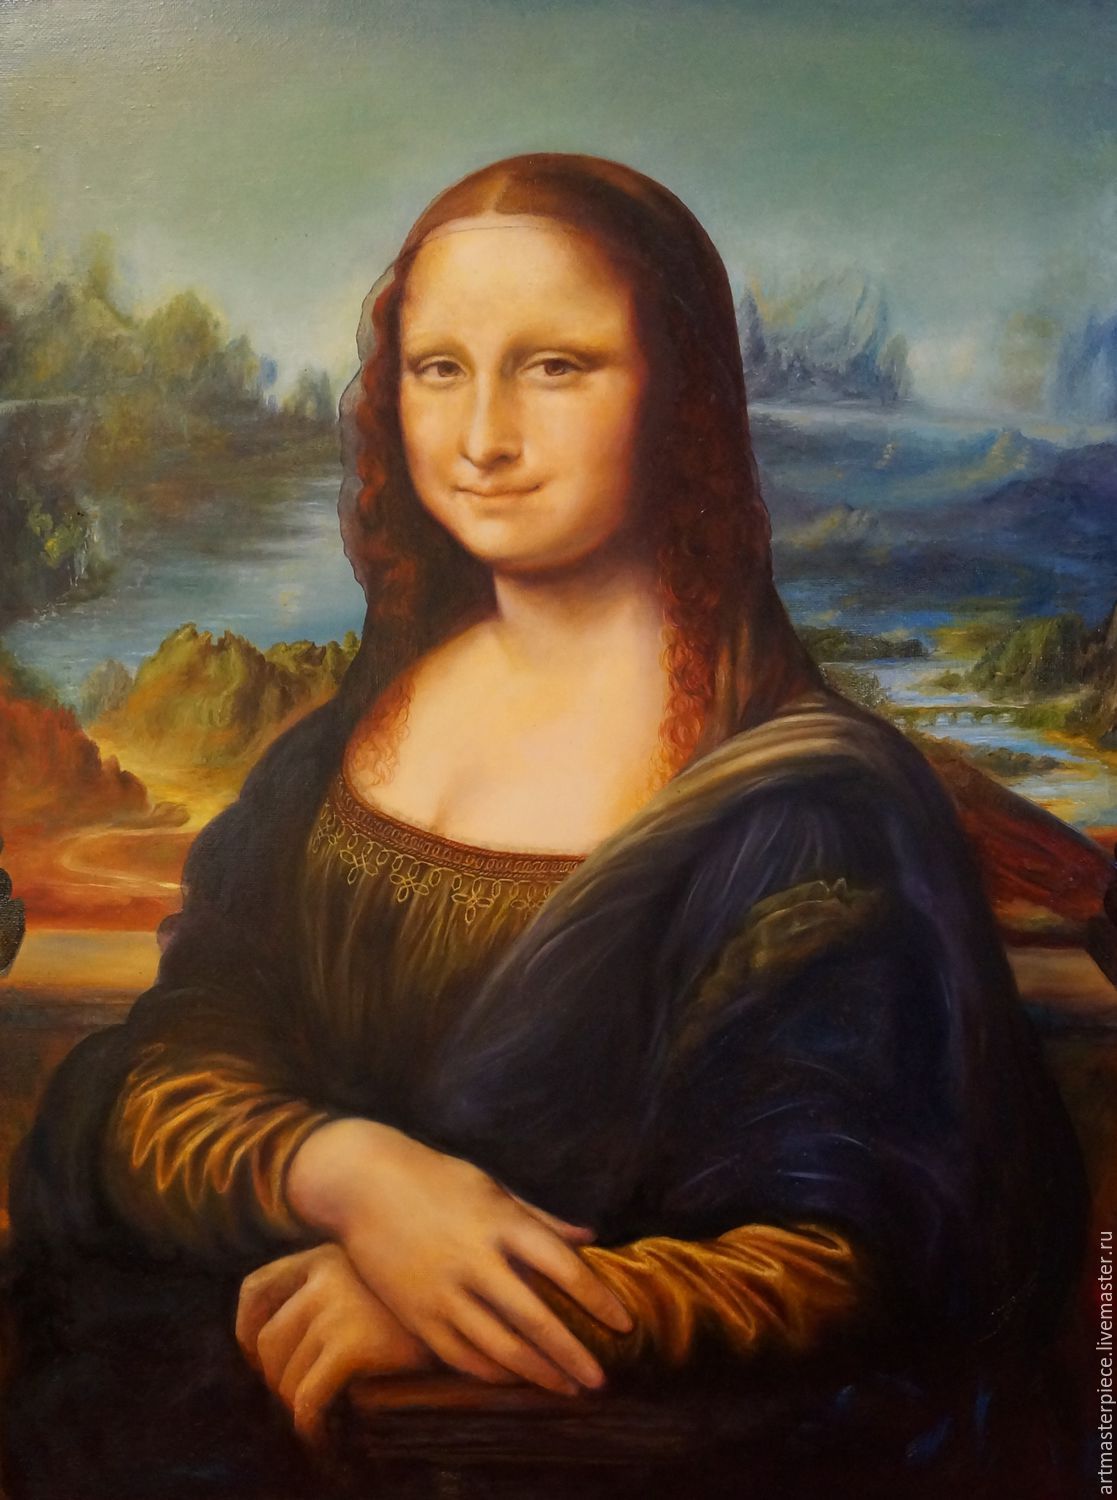 Mona Lisa - Reasons why da Vinci's Mona Lisa is still here: use your